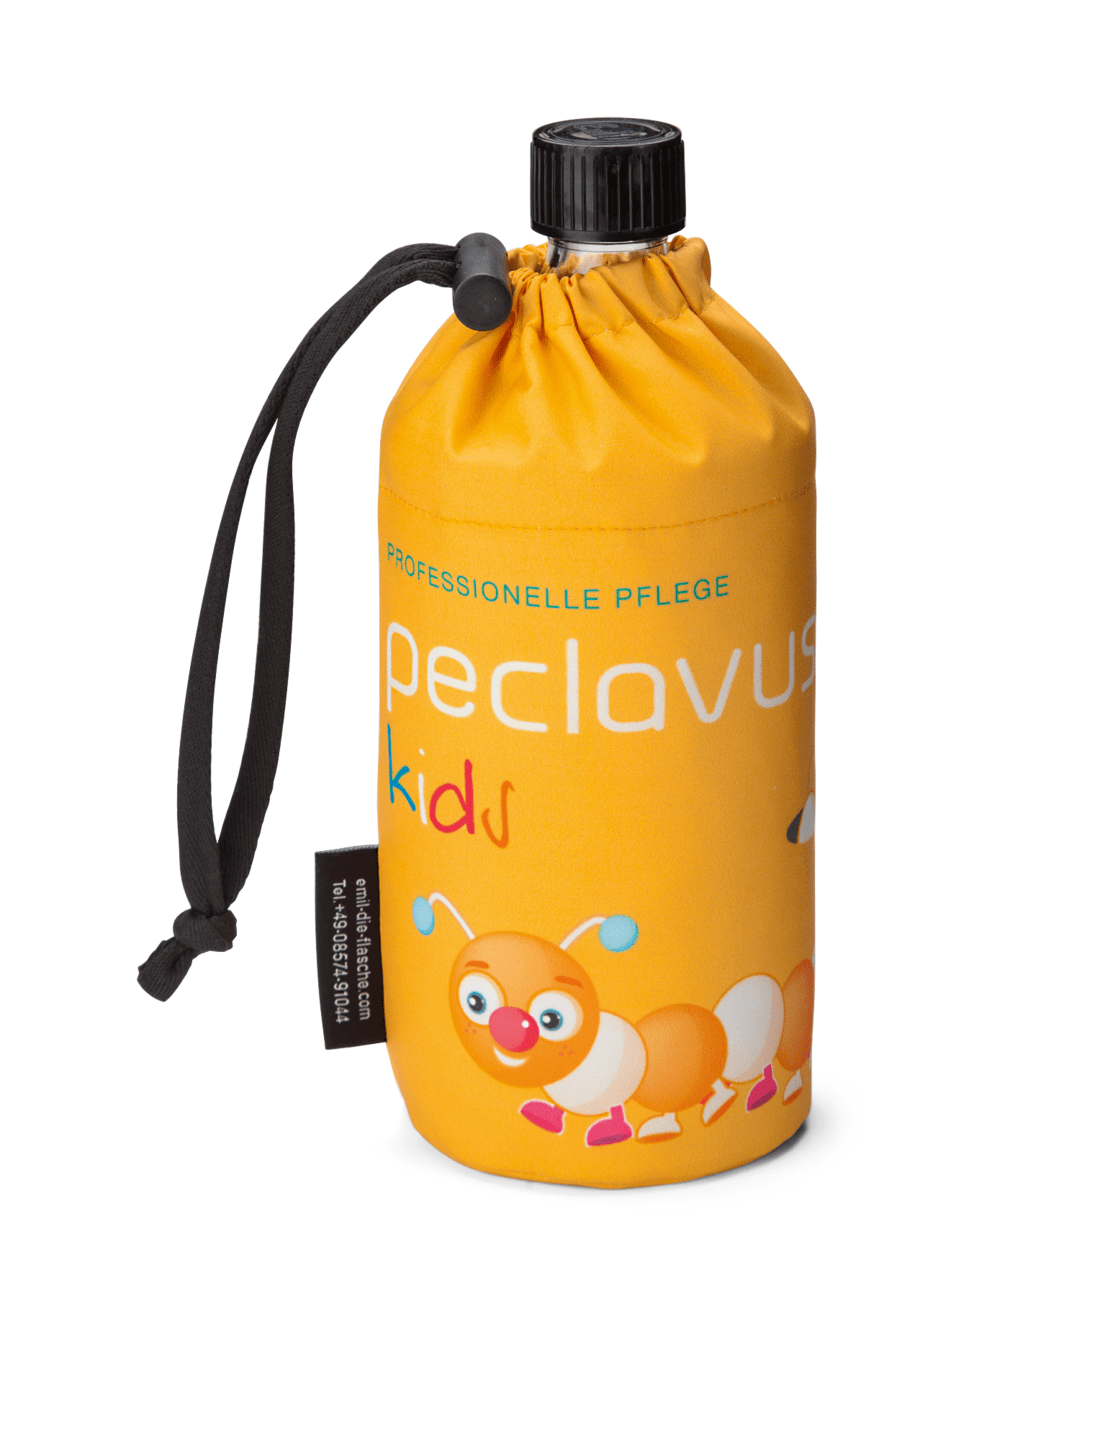 peclavus - Tausendfüßler Trinkflasche, 400 ml